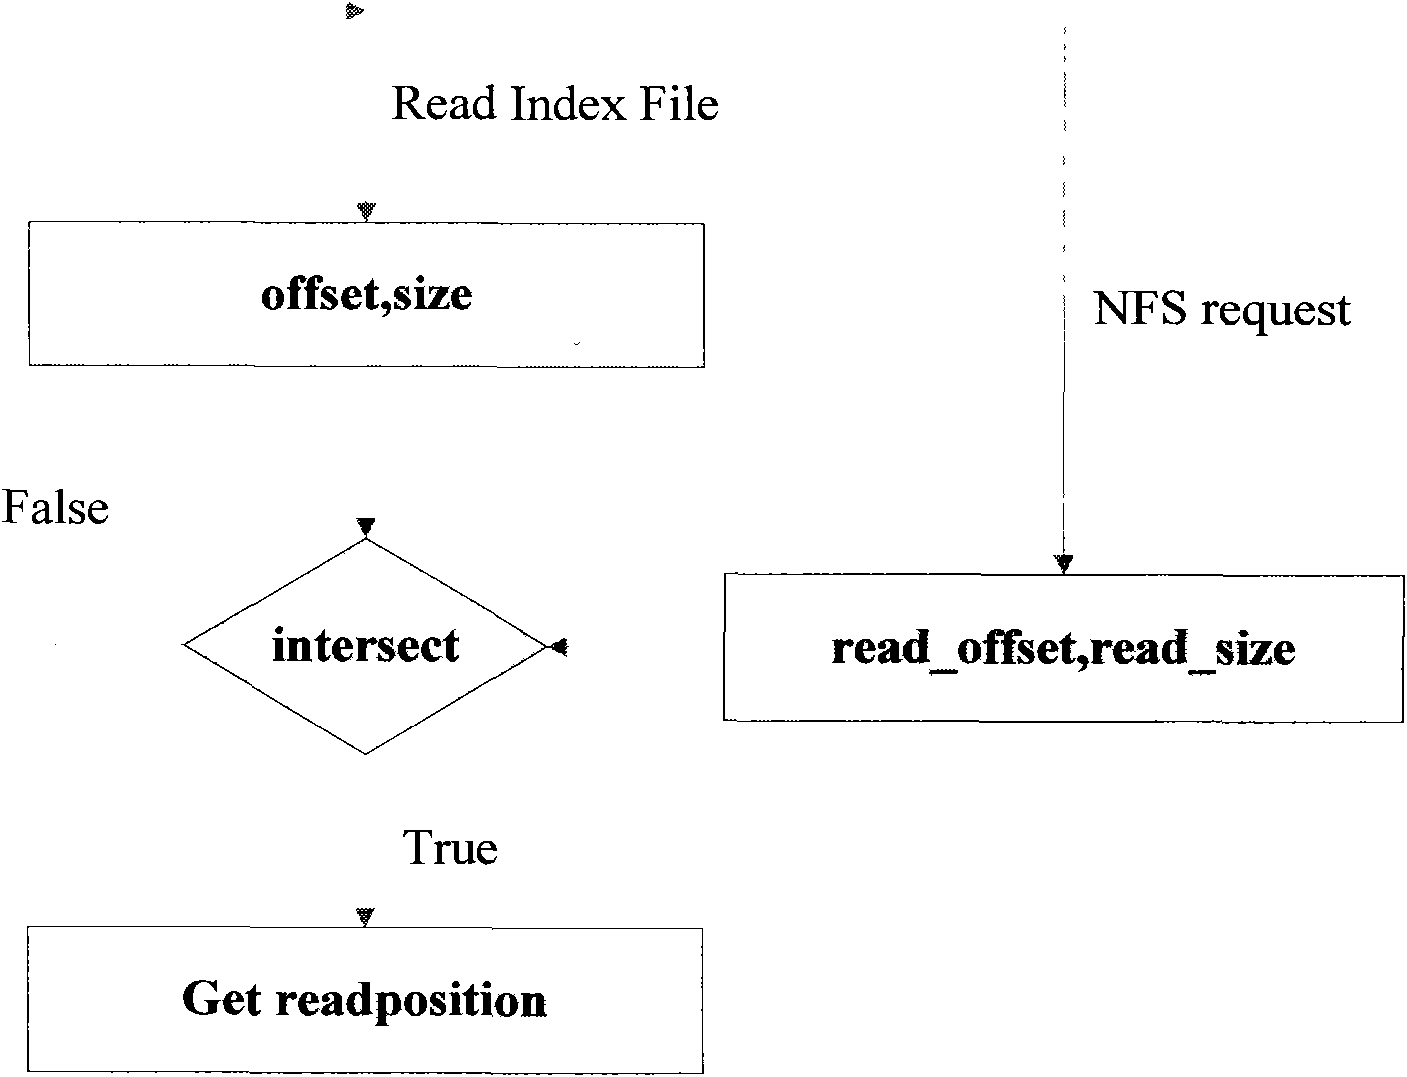 Pseudo-random type NFS application acceleration system